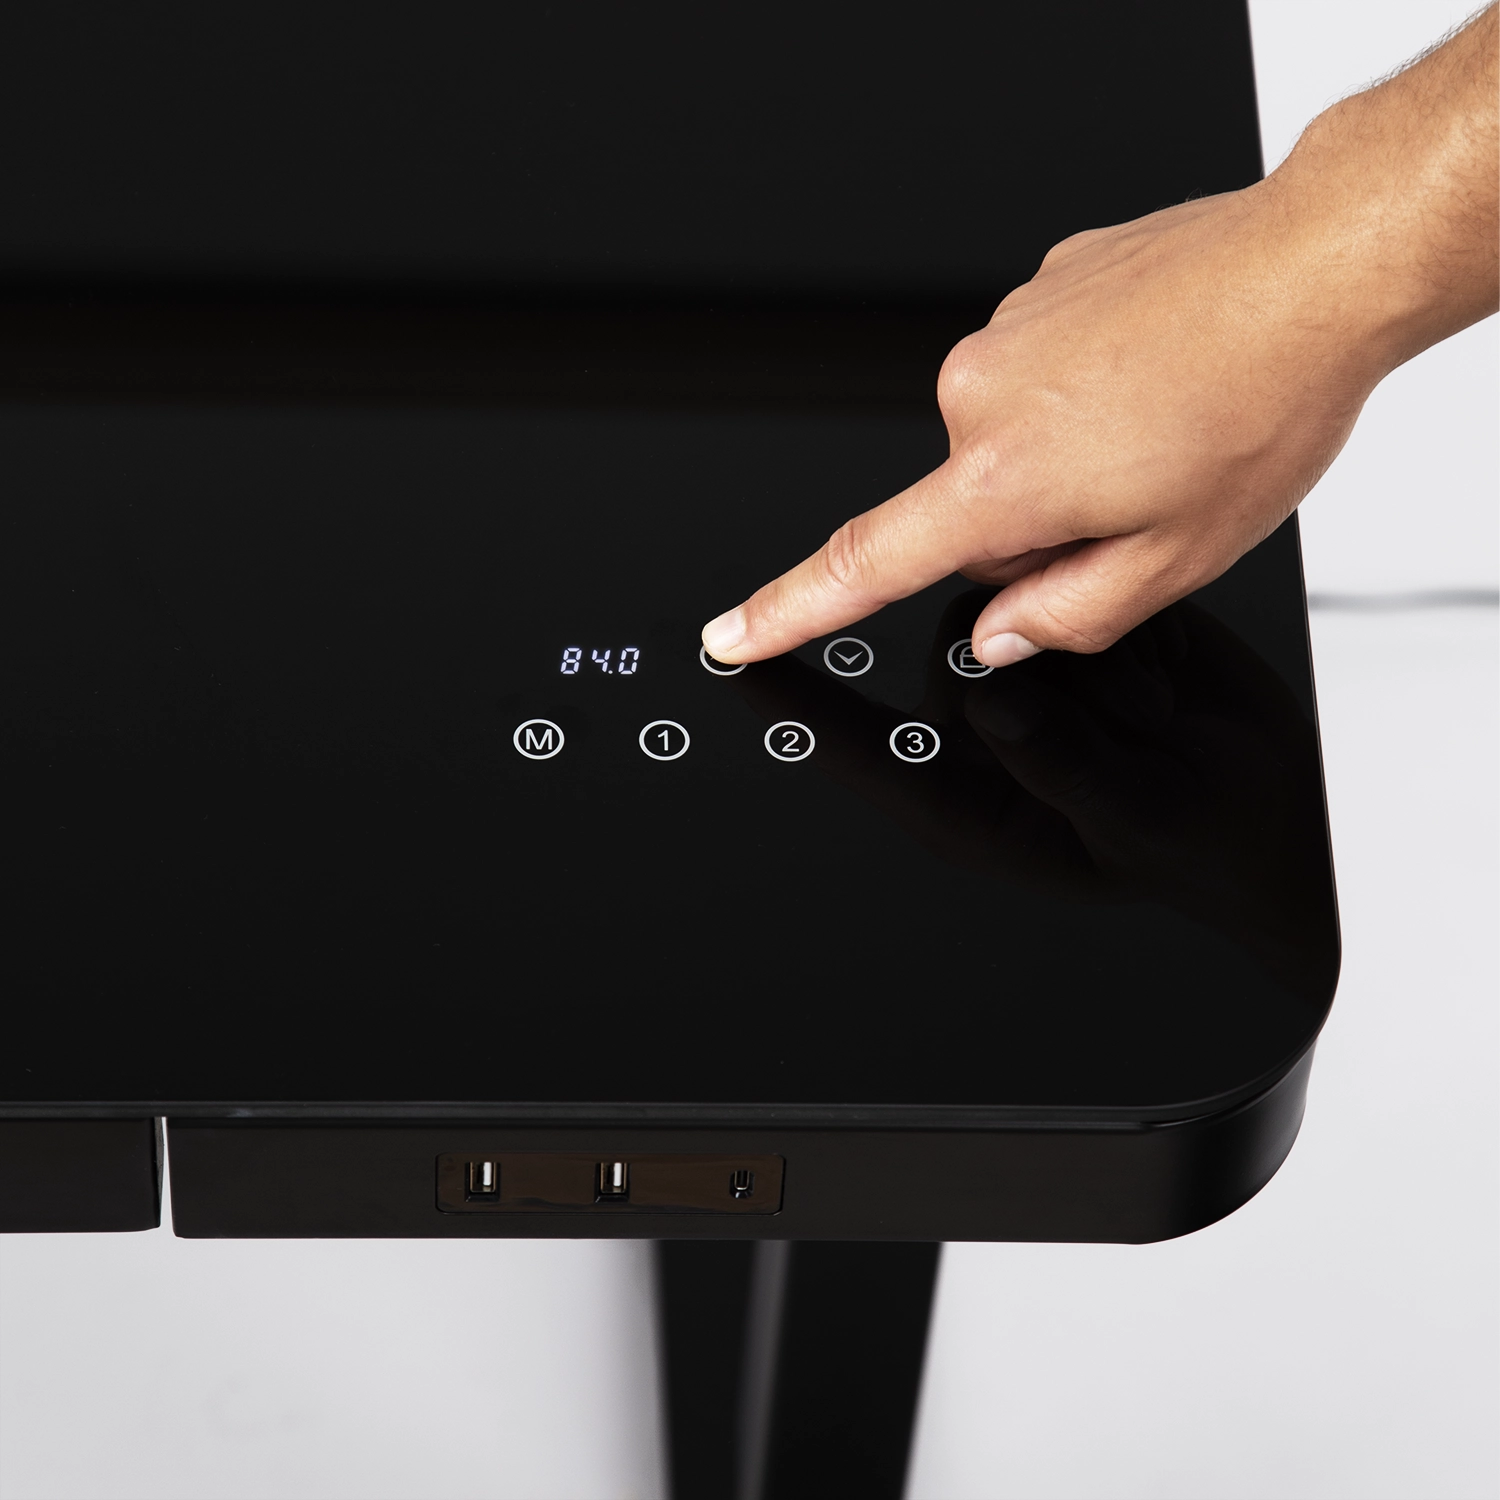 Touchscreen controls on touchscreen sayoasis standing desk